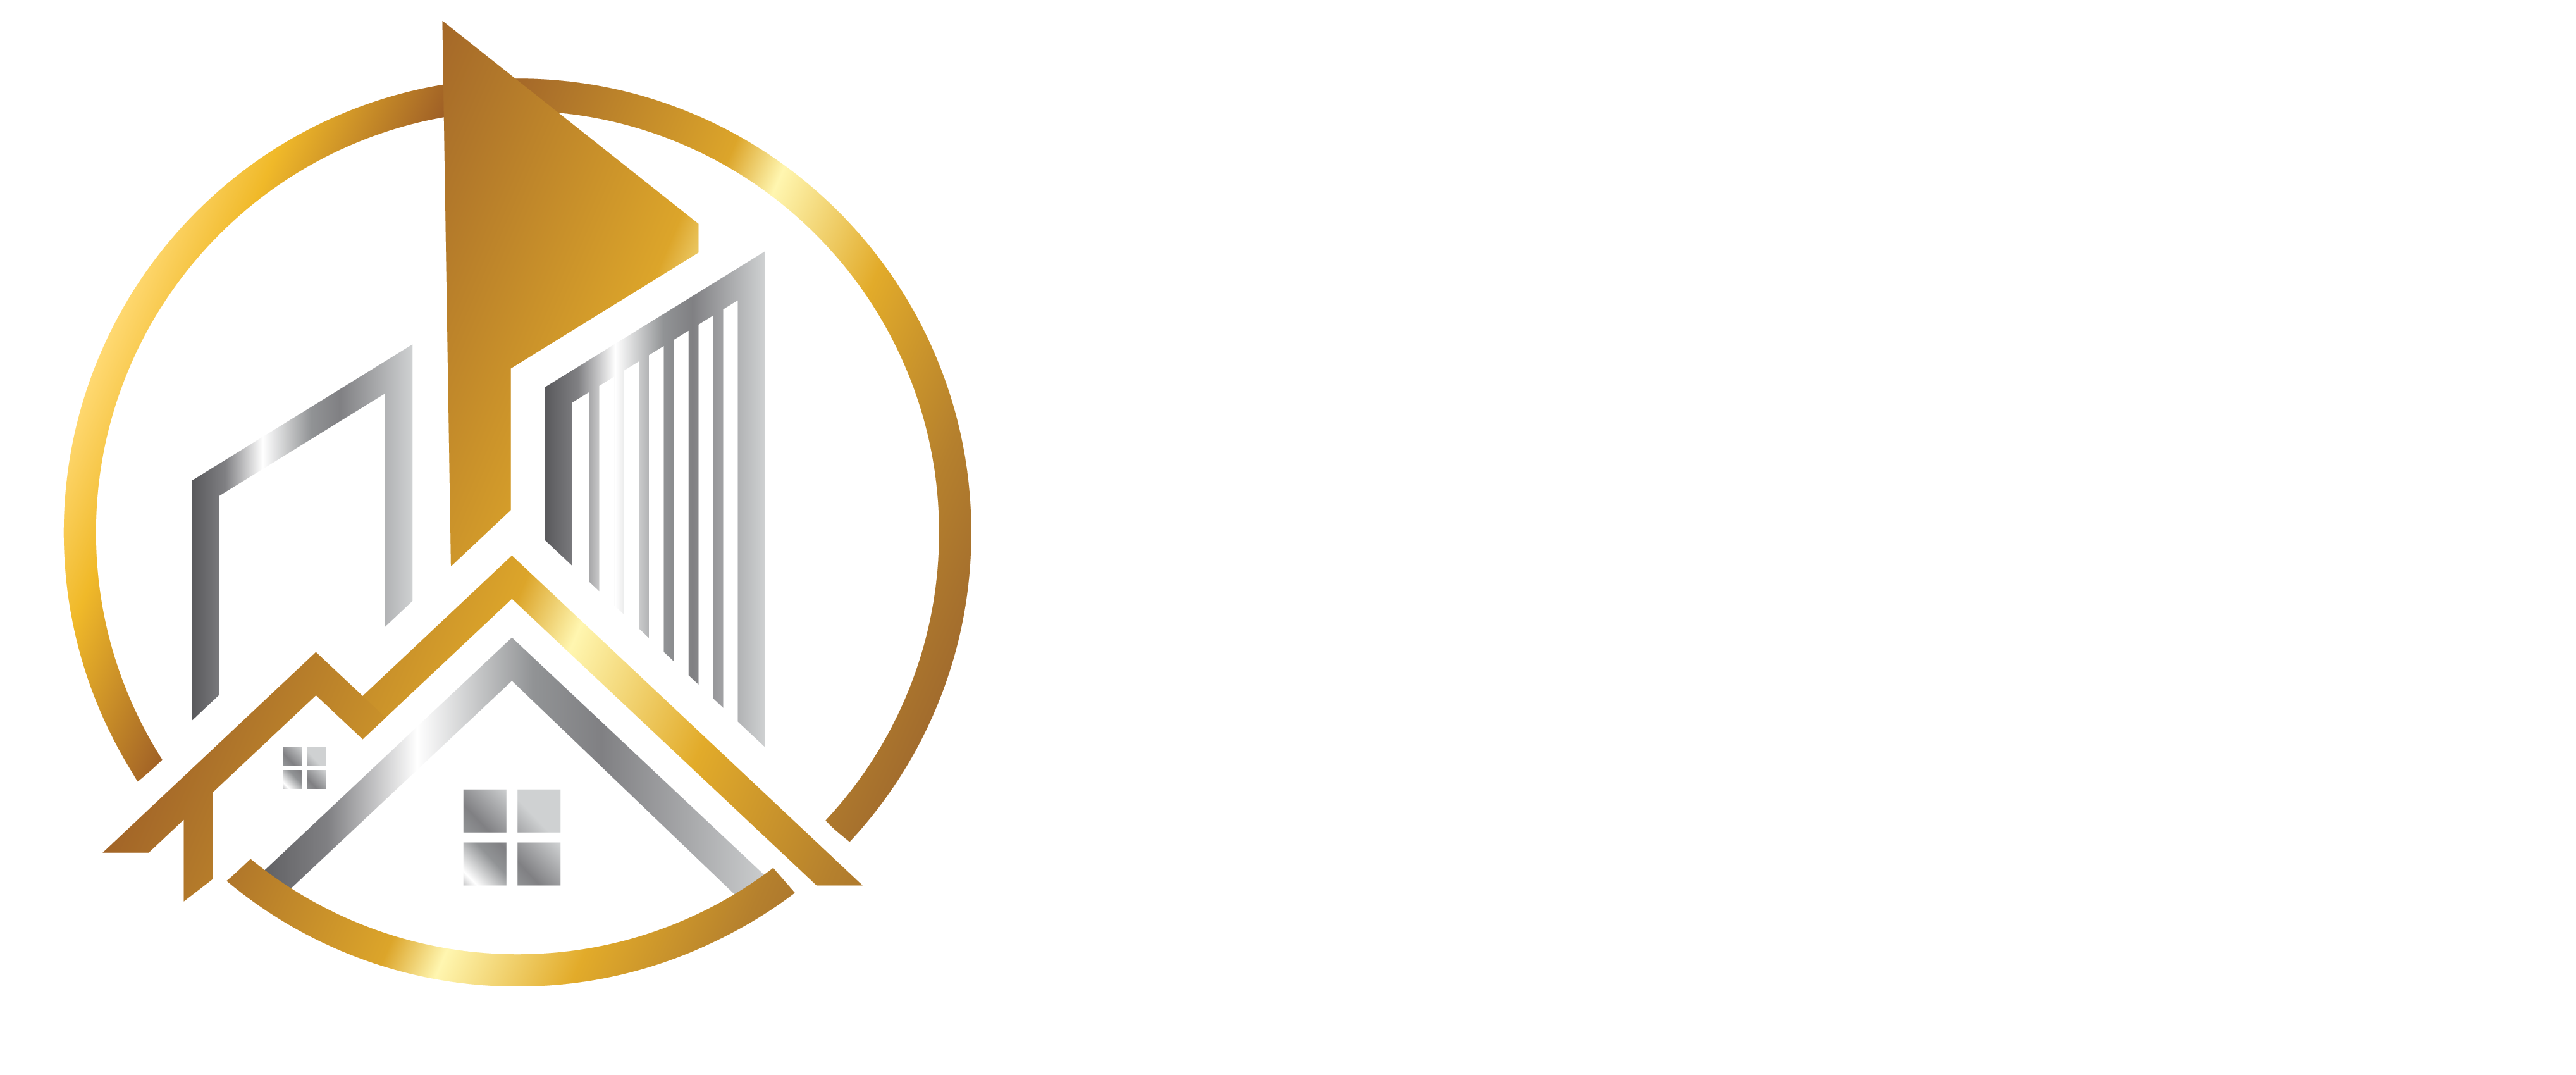 Nova Claims